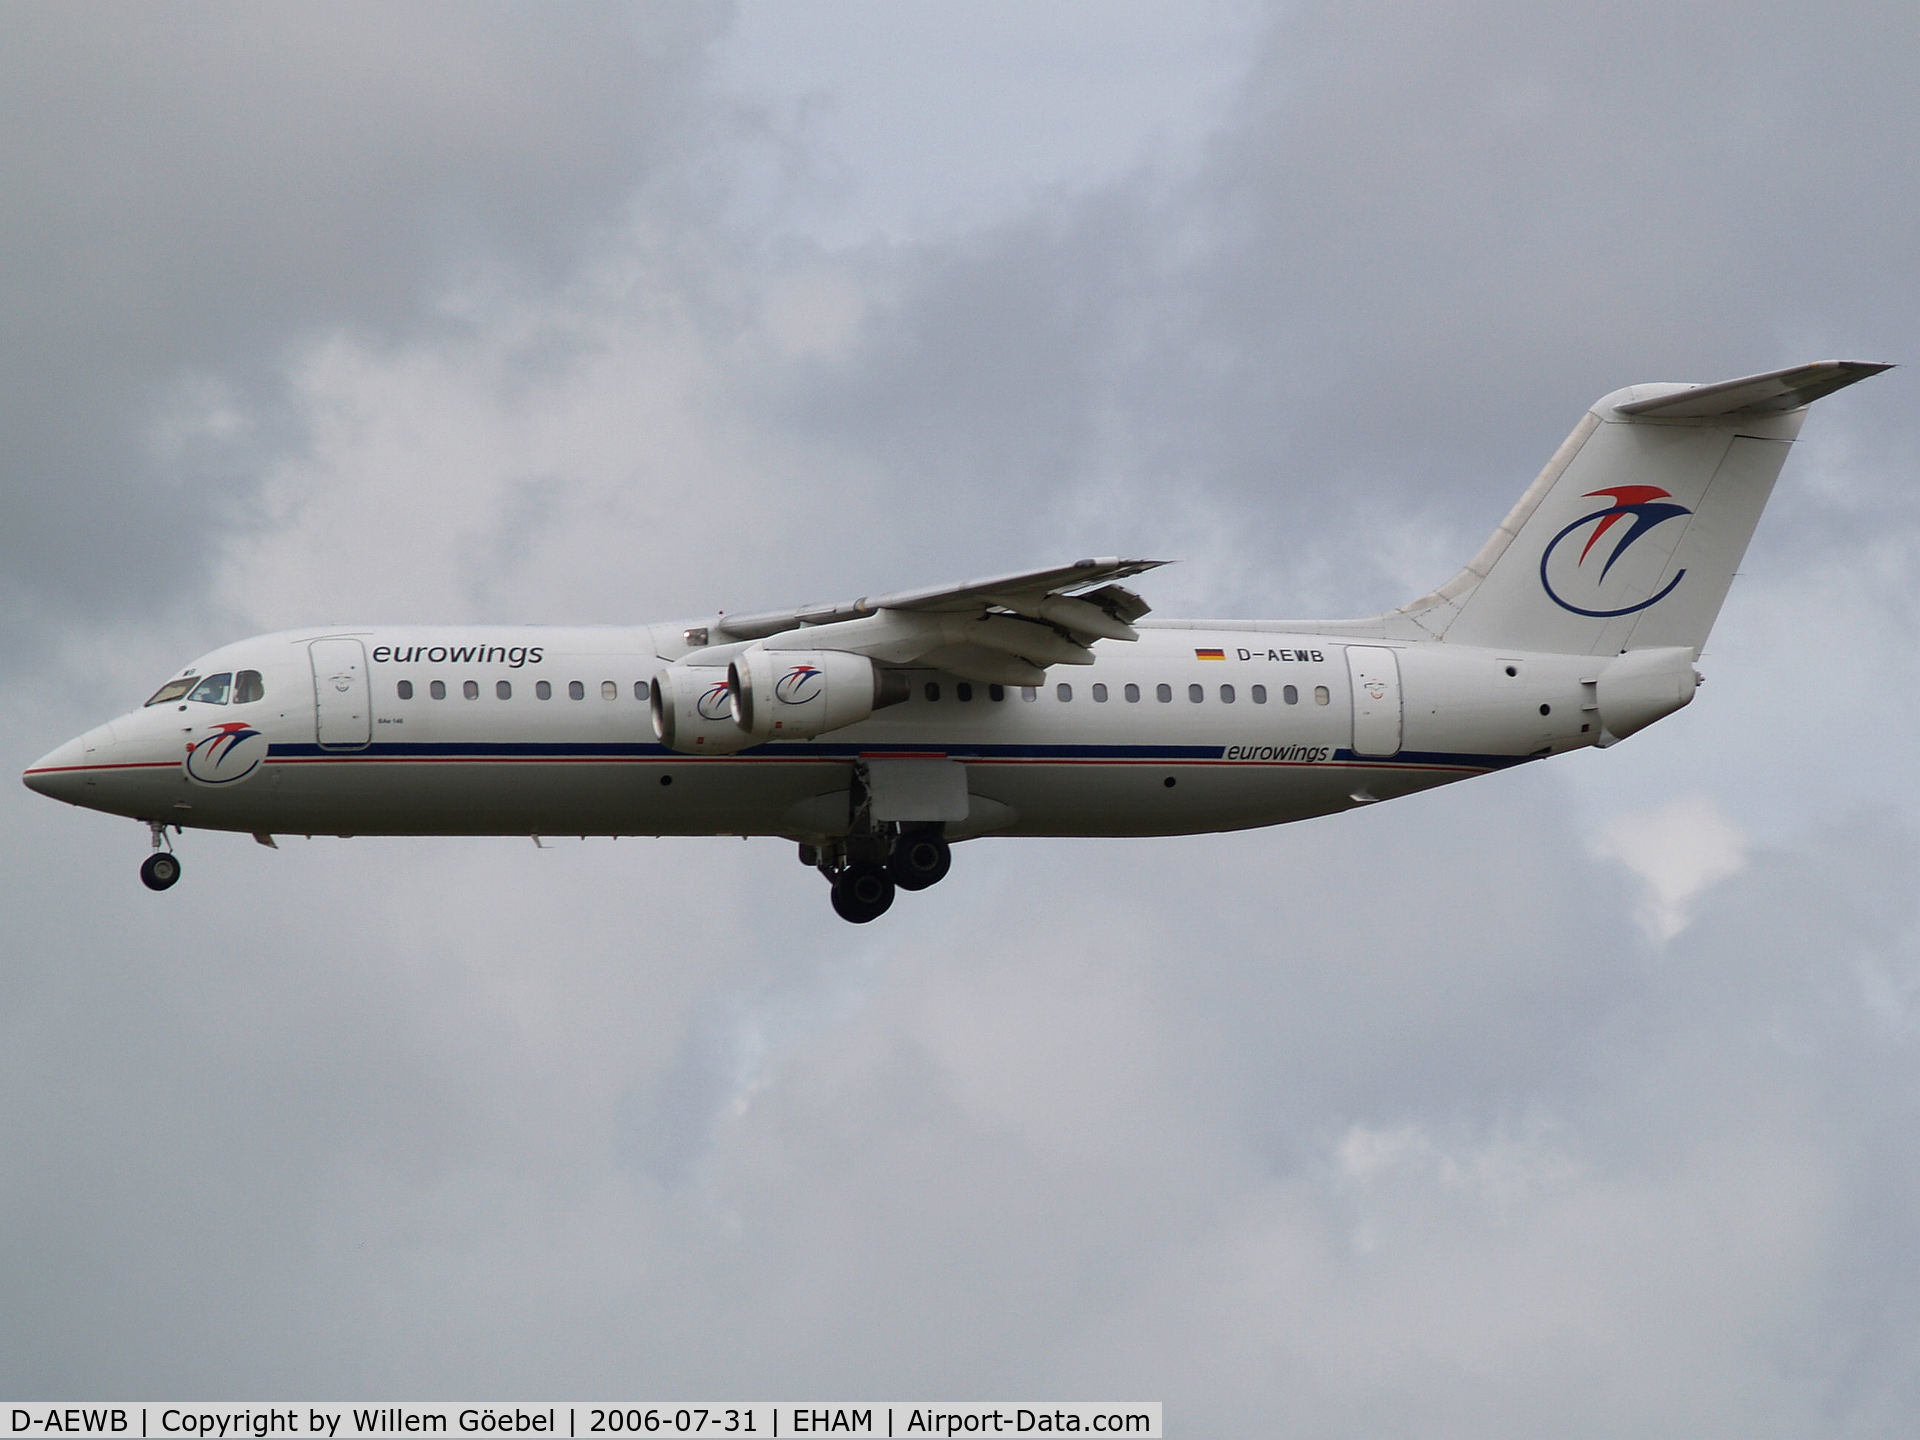 D-AEWB, 1990 British Aerospace BAe.146-300 C/N E3183, Landing on runway C18 of Amsterdam Airport